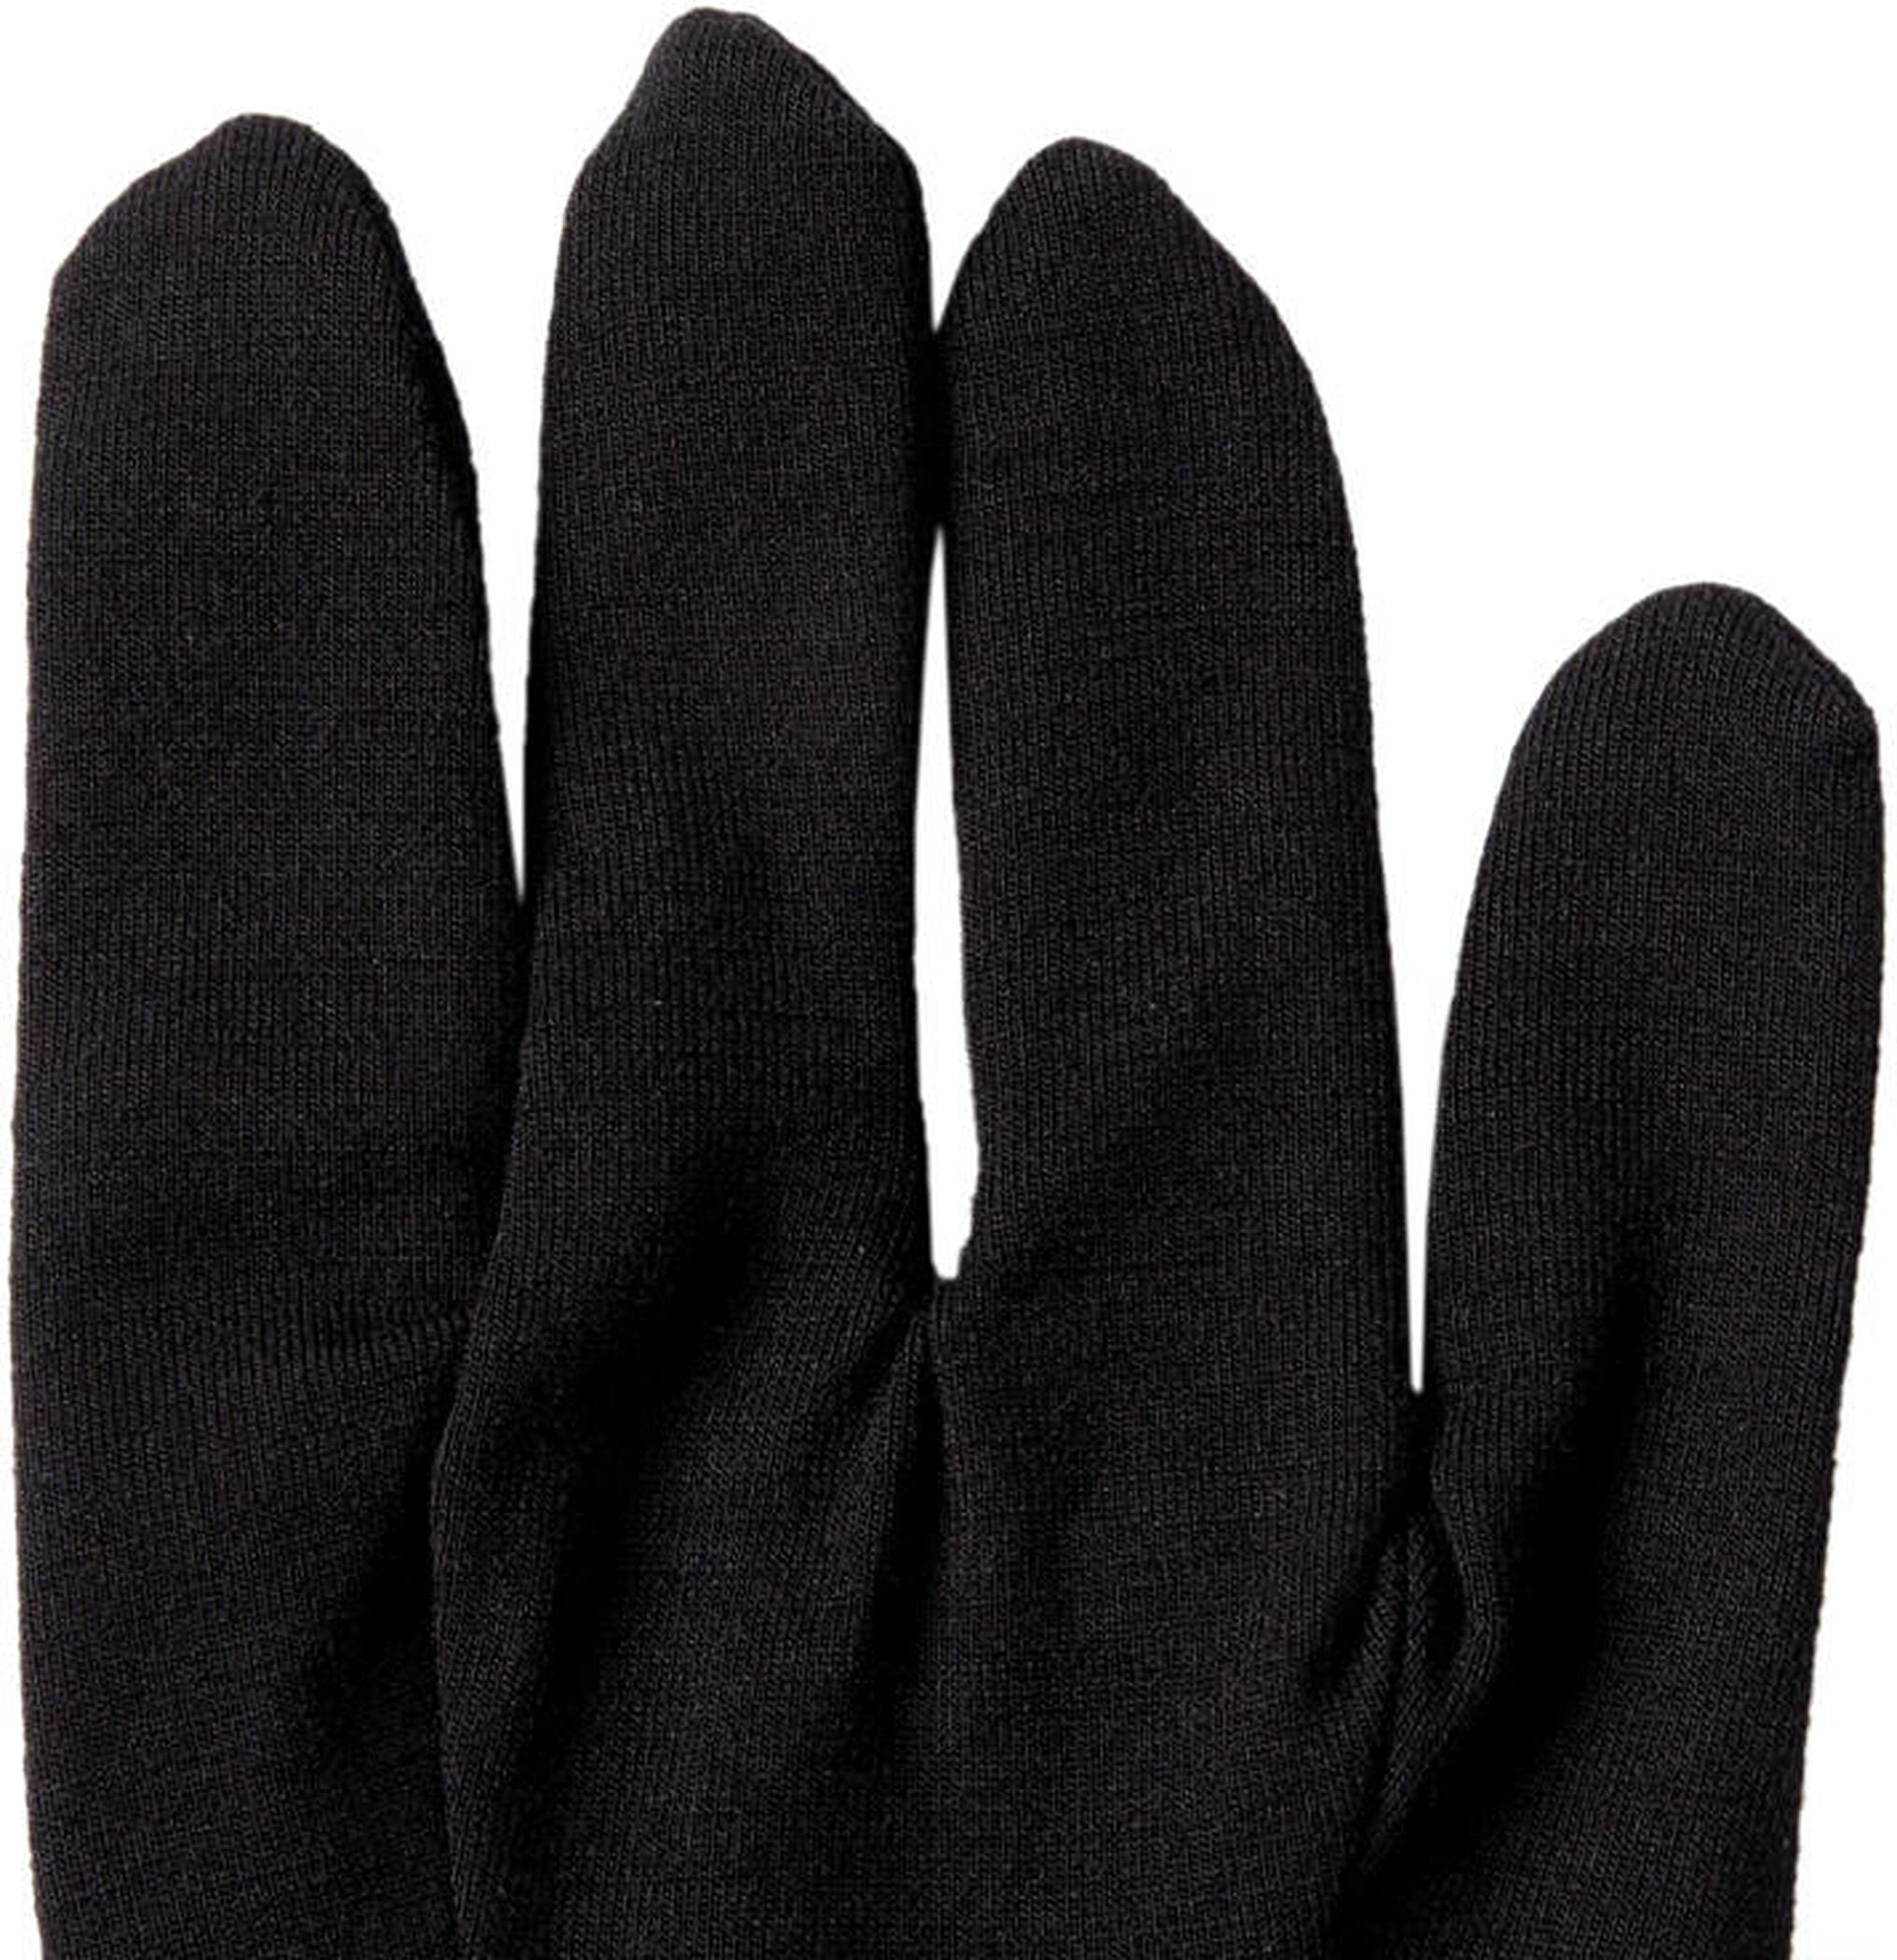 Handschuhe / Unterzieh-Handschuhe "Gloveliner"